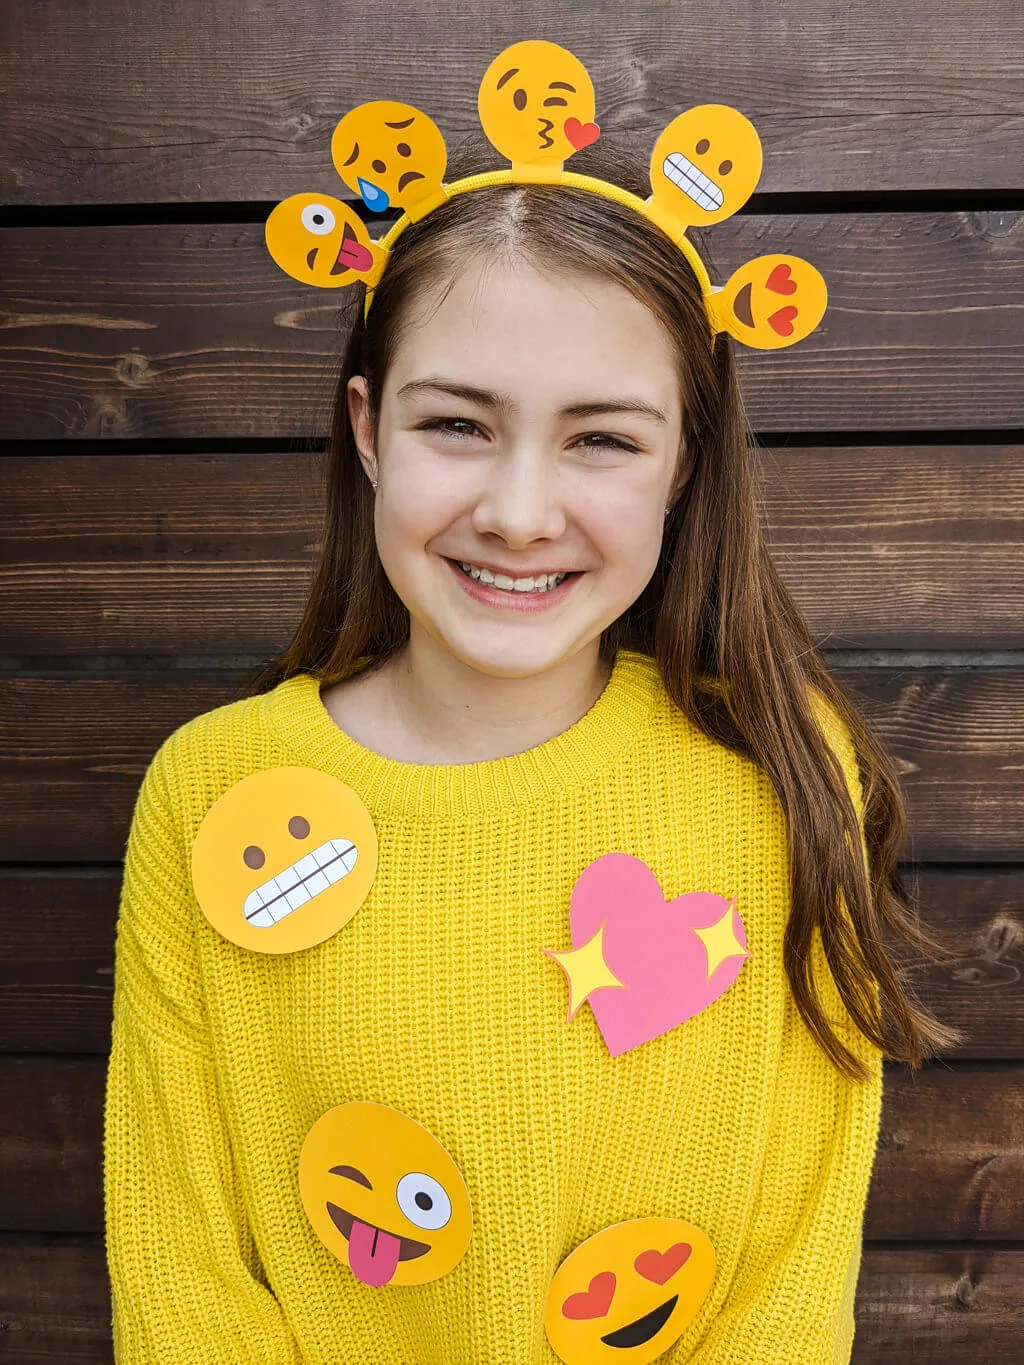 Easy Emoji Halloween Costume DIY Idea with Printable Headband - Merriment Design